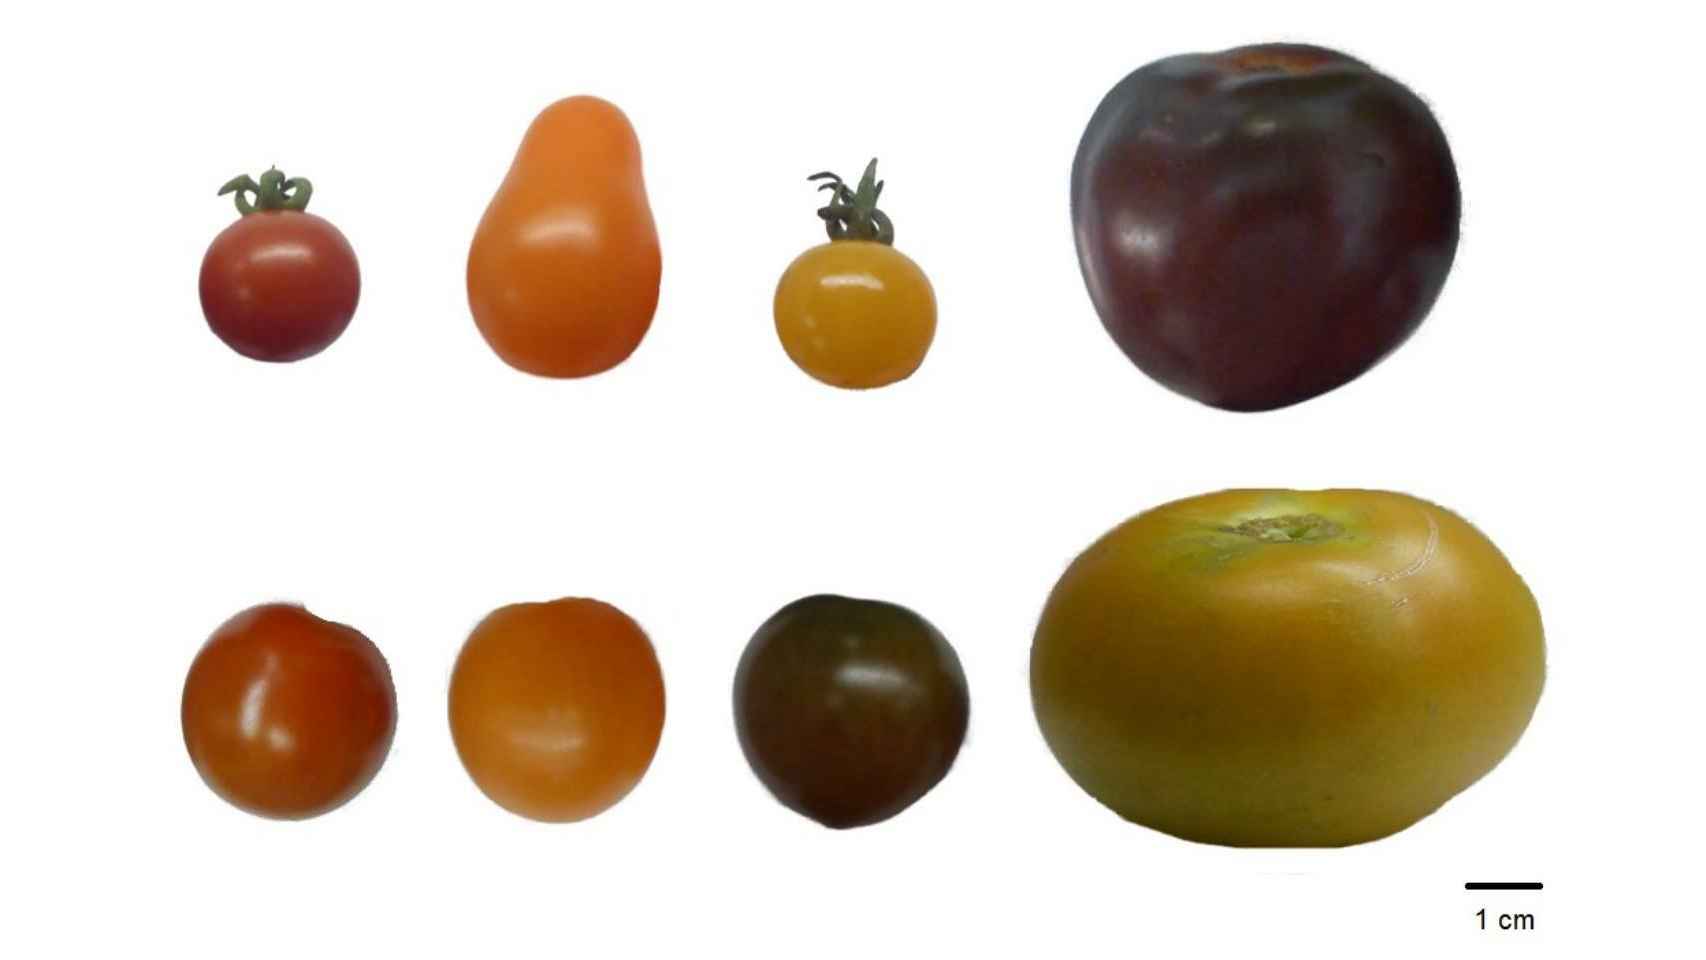 Las ocho variedades de tomate evaluadas.